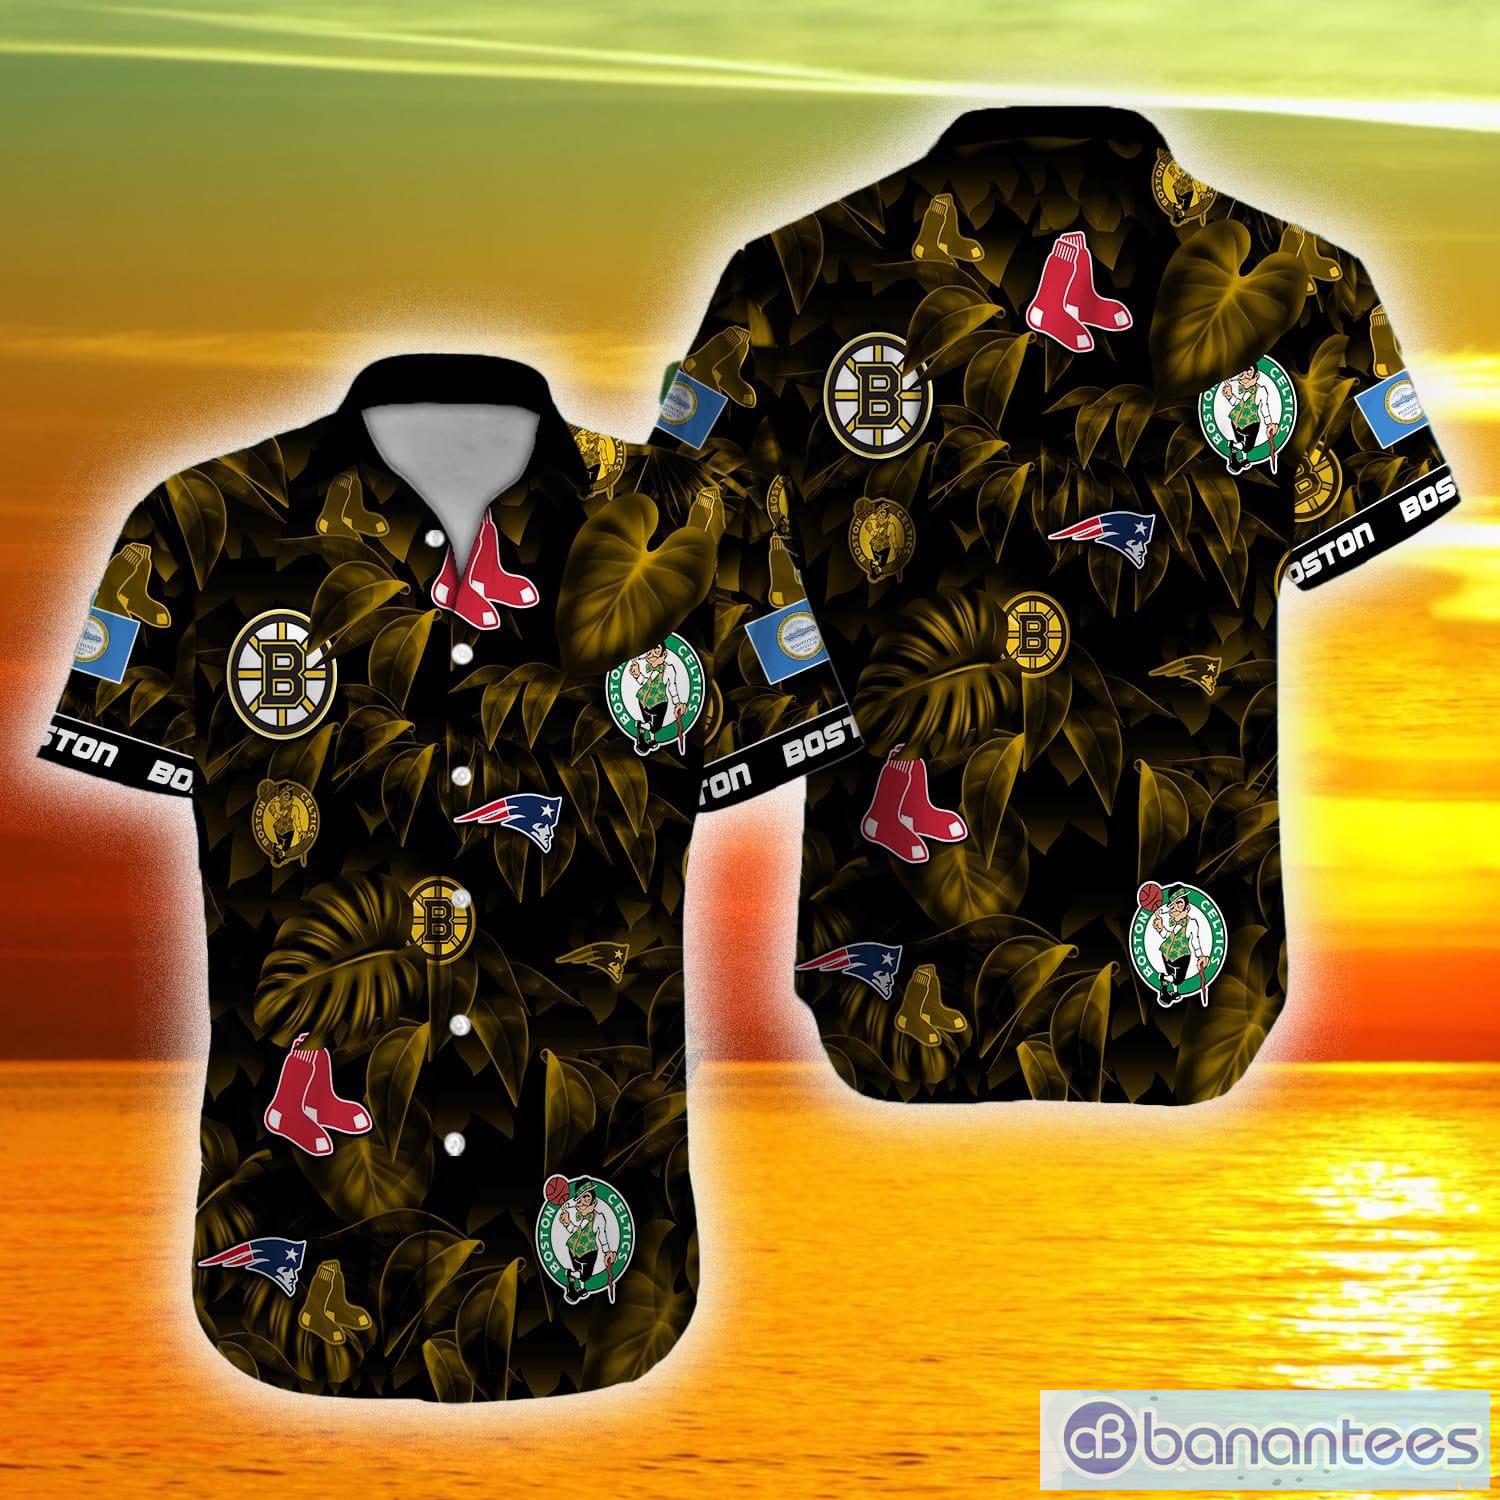 Boston Celtics Island Hawaiian Shirt For Men And Women Gift Beach